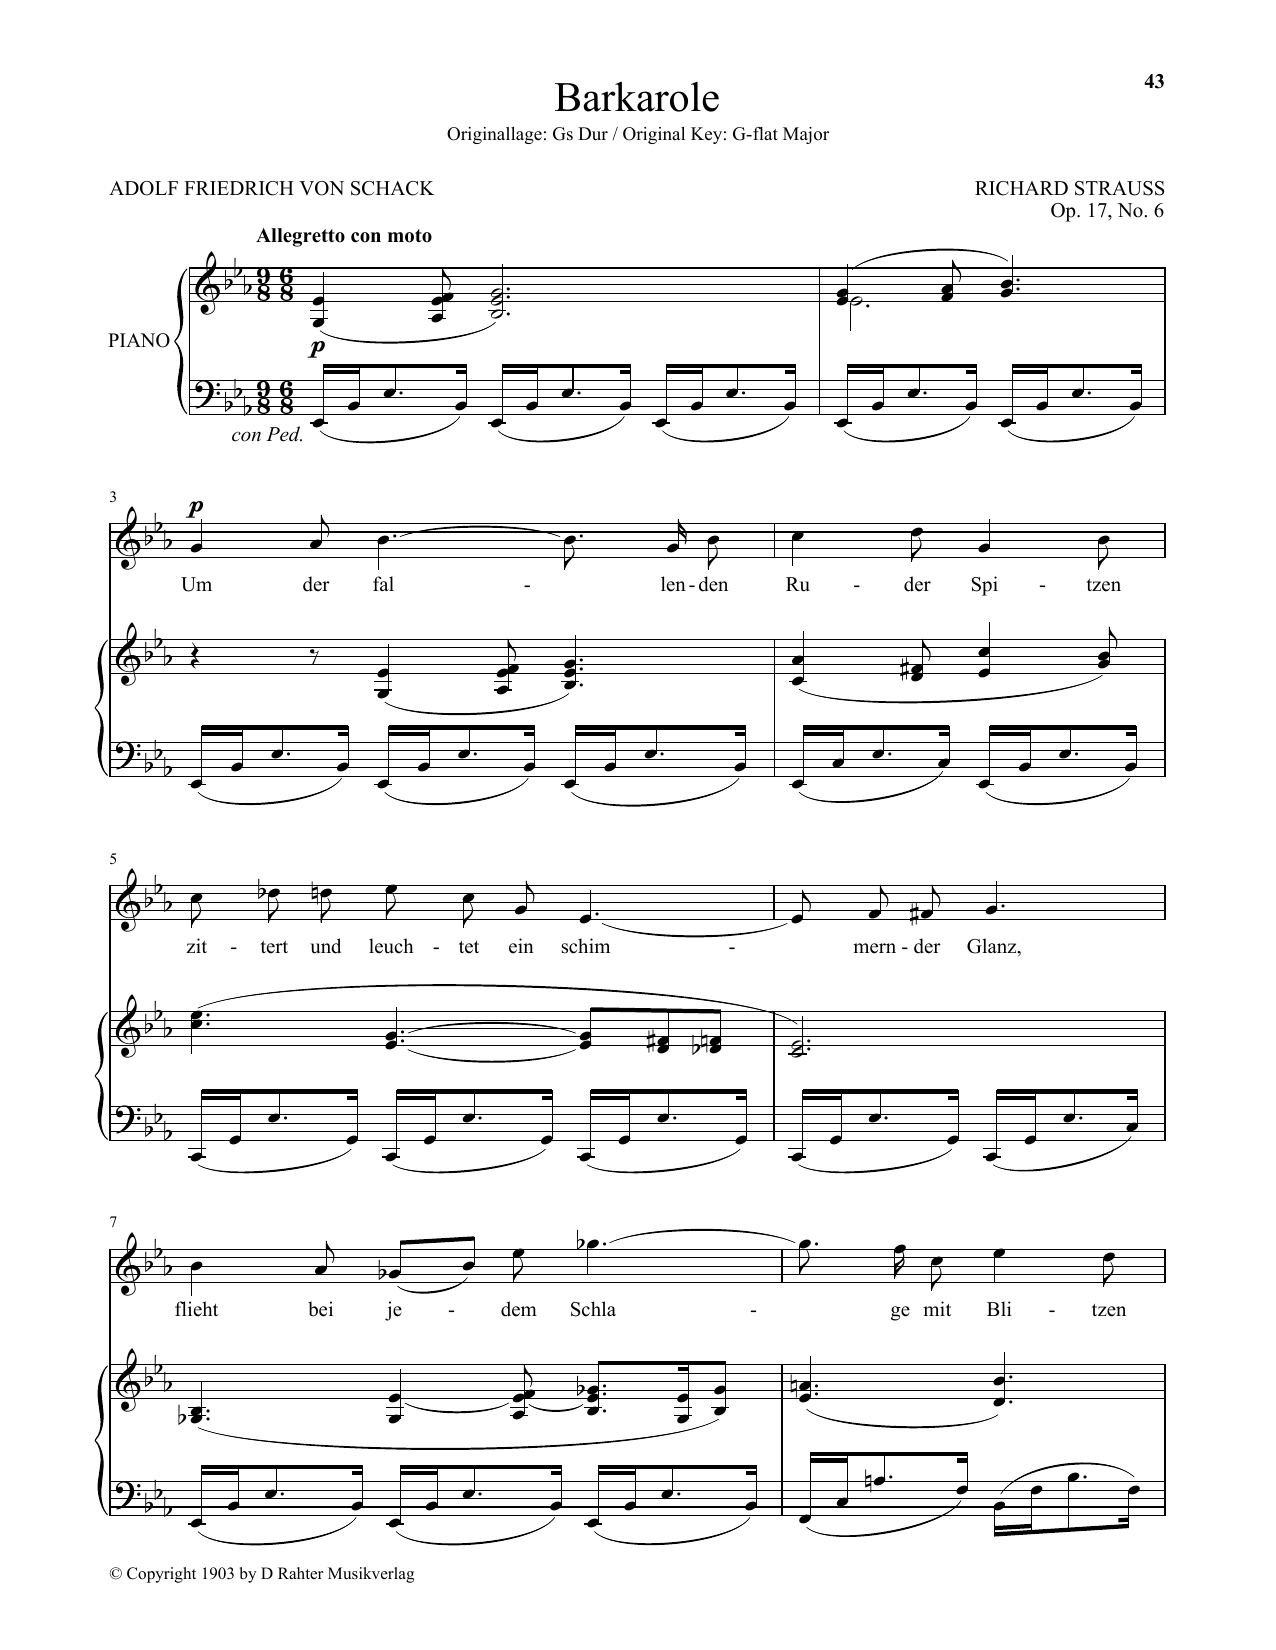 Download Richard Strauss Barkarole (Low Voice) Sheet Music